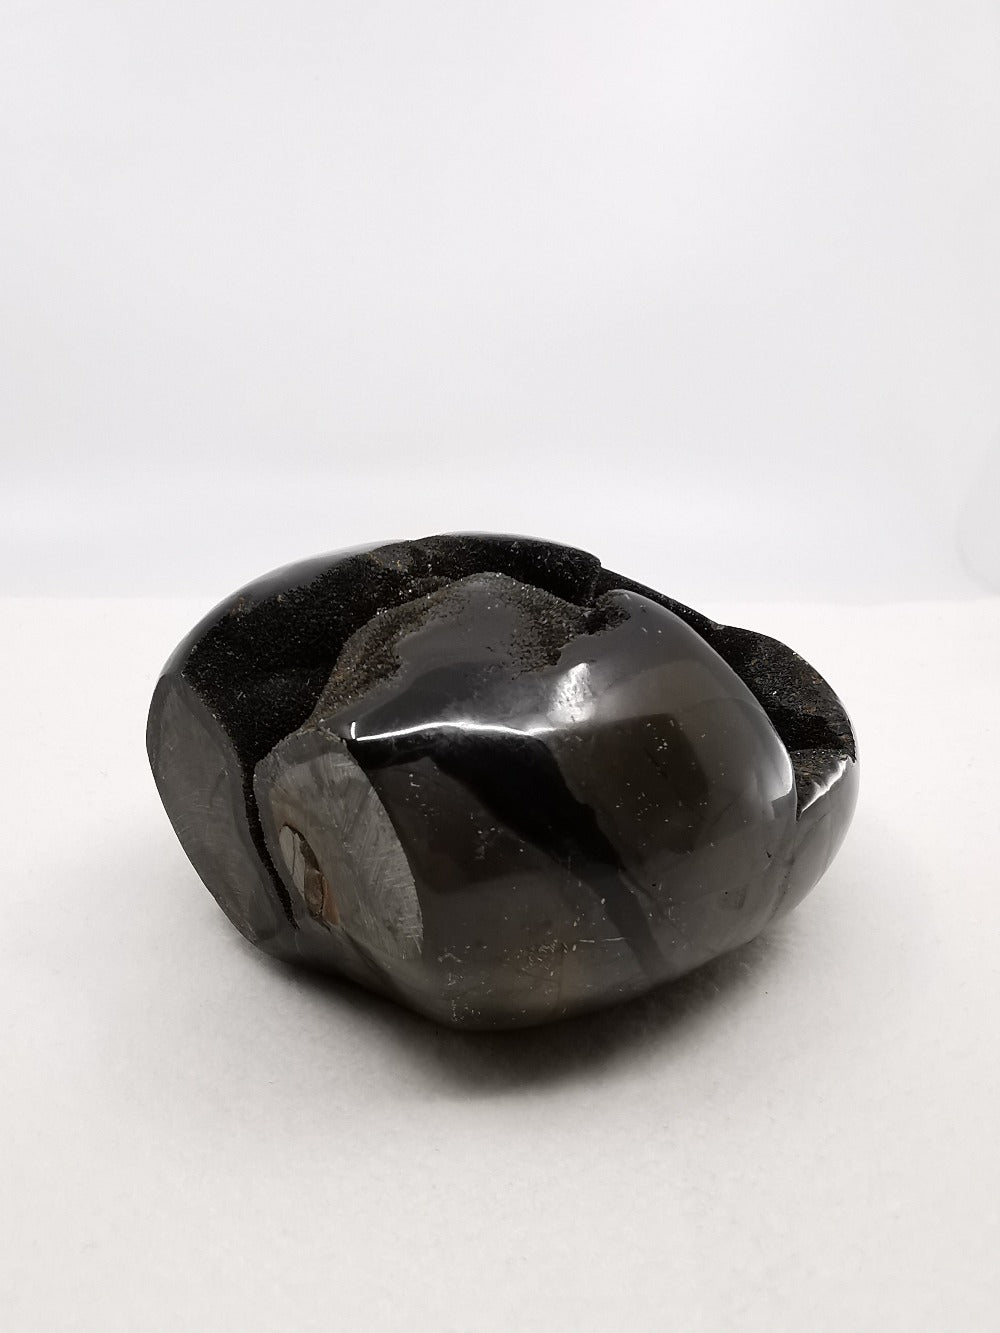 Septarian Geode Stone 7